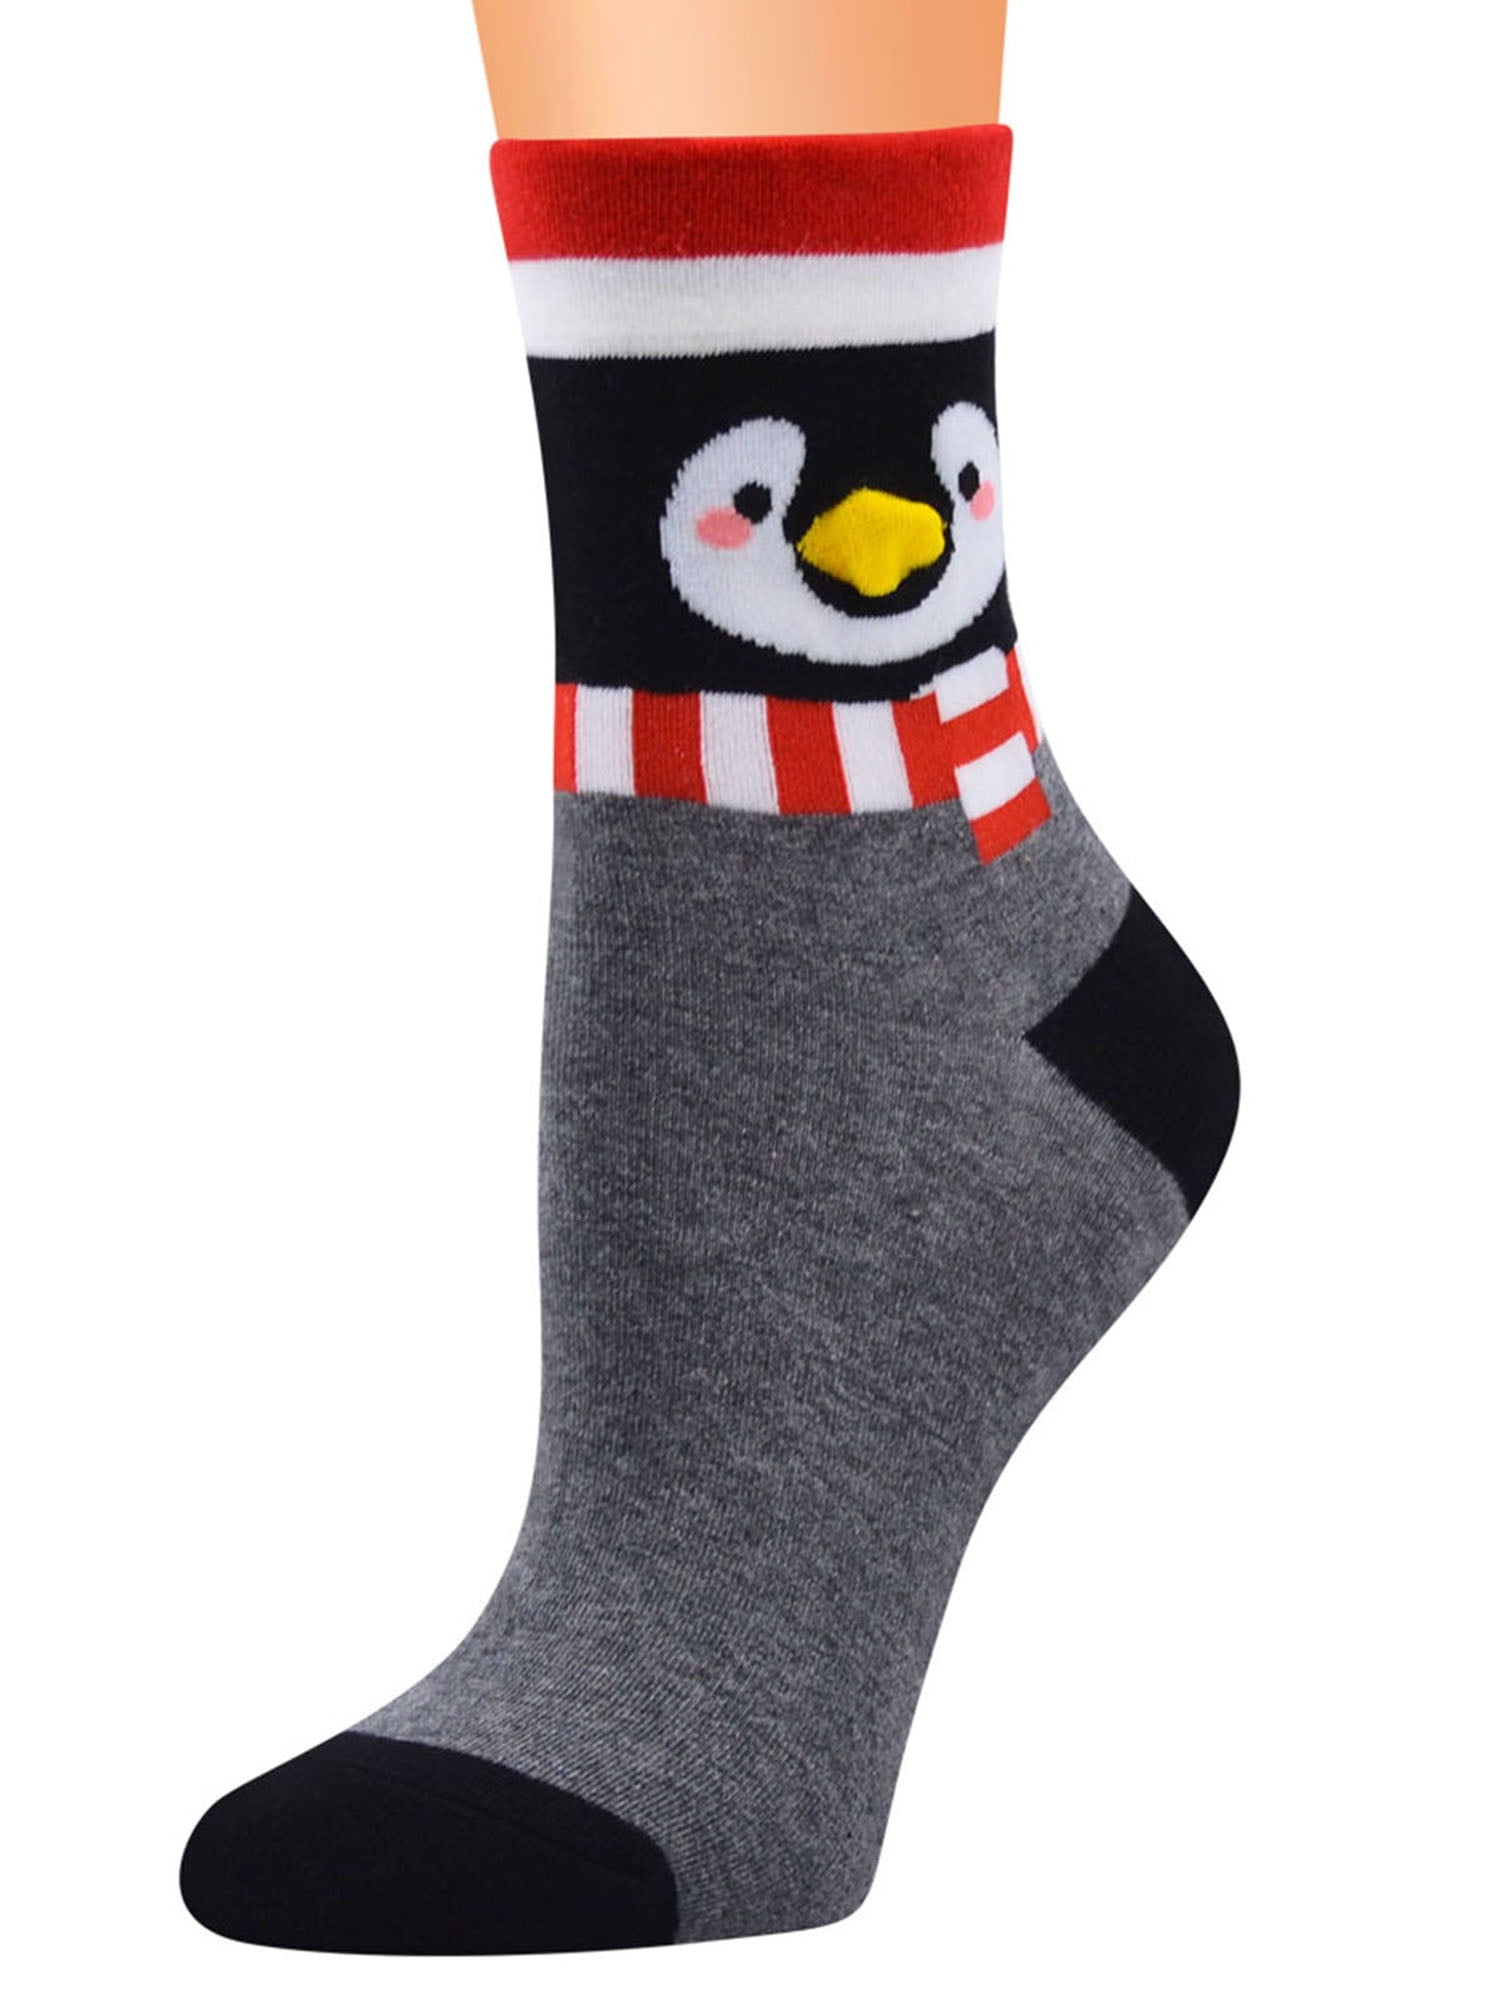 Fanvereka Christmas Women Mid-calf Length Stockings Cartoon Short Socks -